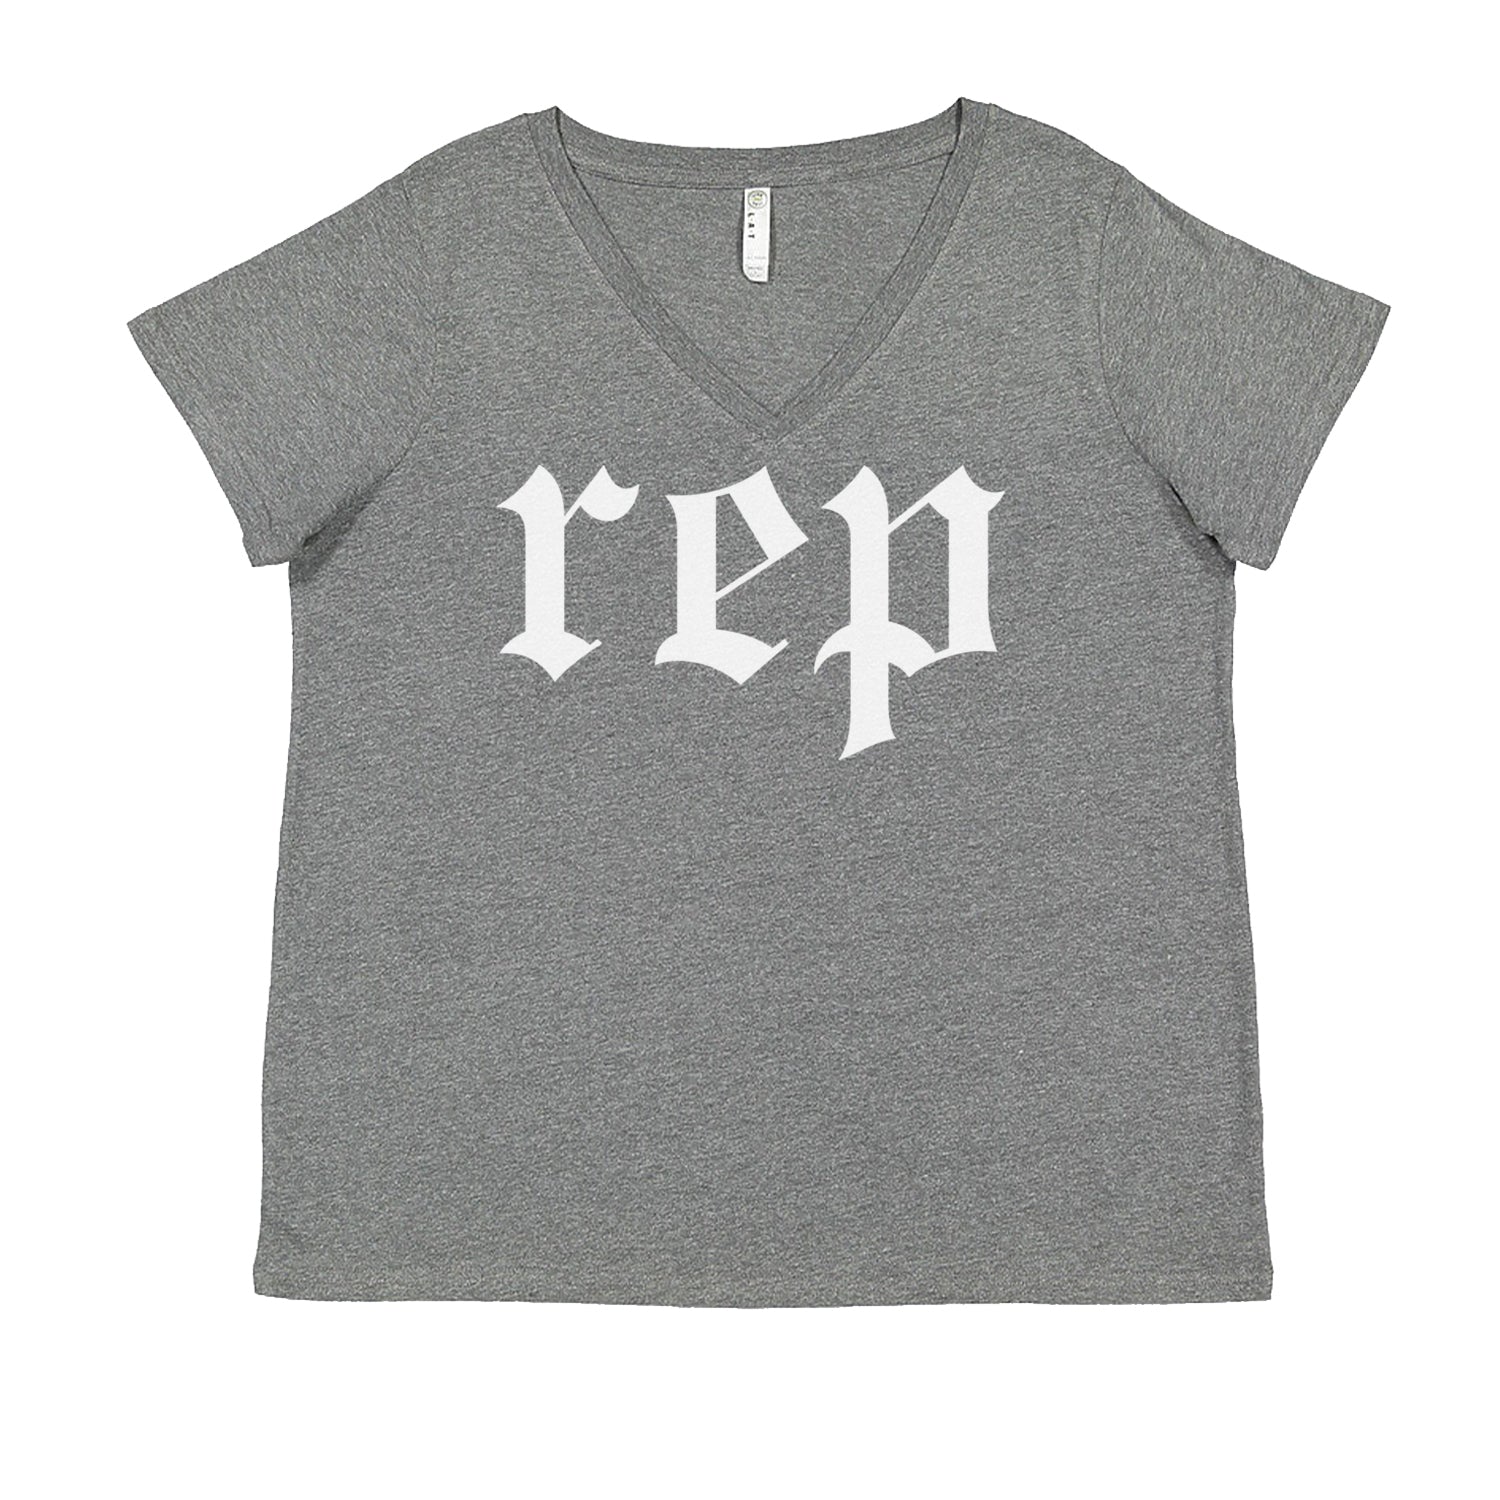 REP Reputation Eras Music Lover Gift Fan Favorite Ladies V-Neck T-shirt Heather Grey